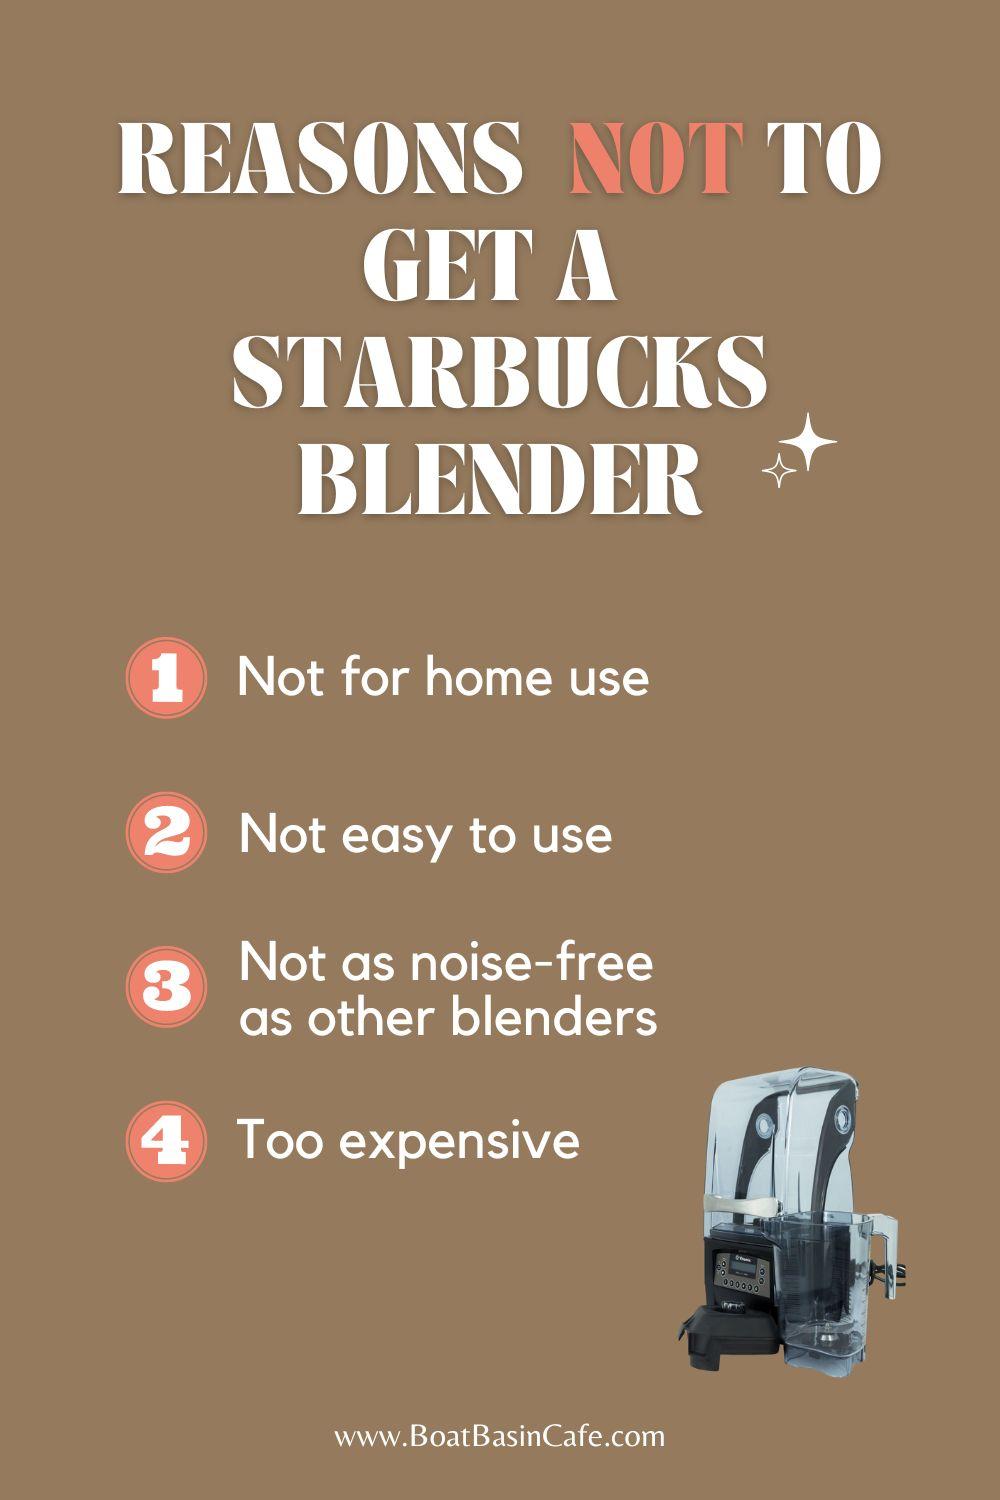 Should You Get The Vitamix Blender That Starbucks Uses?